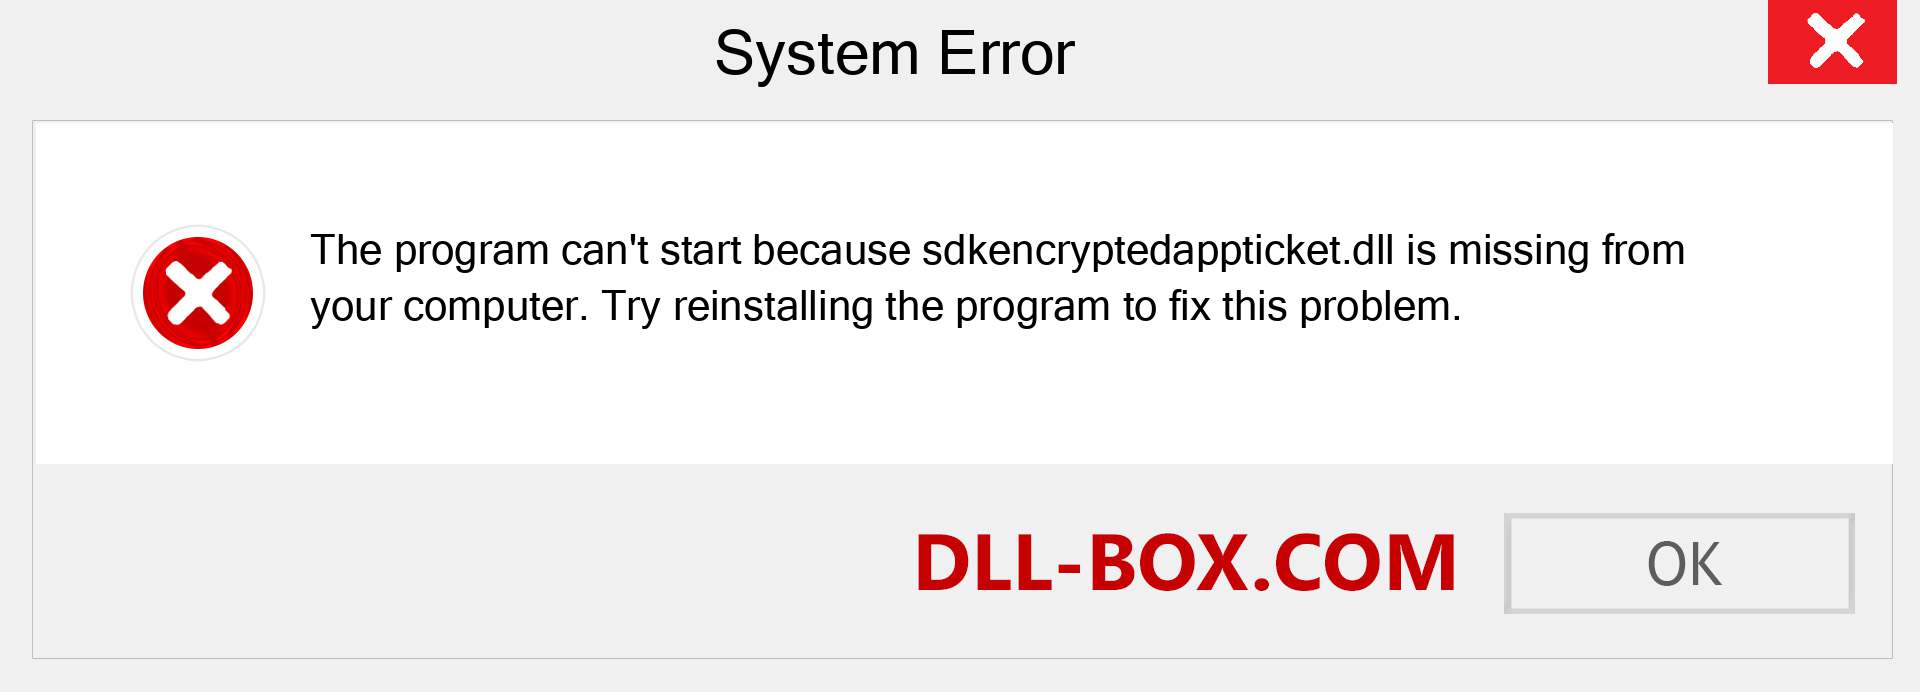  sdkencryptedappticket.dll file is missing?. Download for Windows 7, 8, 10 - Fix  sdkencryptedappticket dll Missing Error on Windows, photos, images